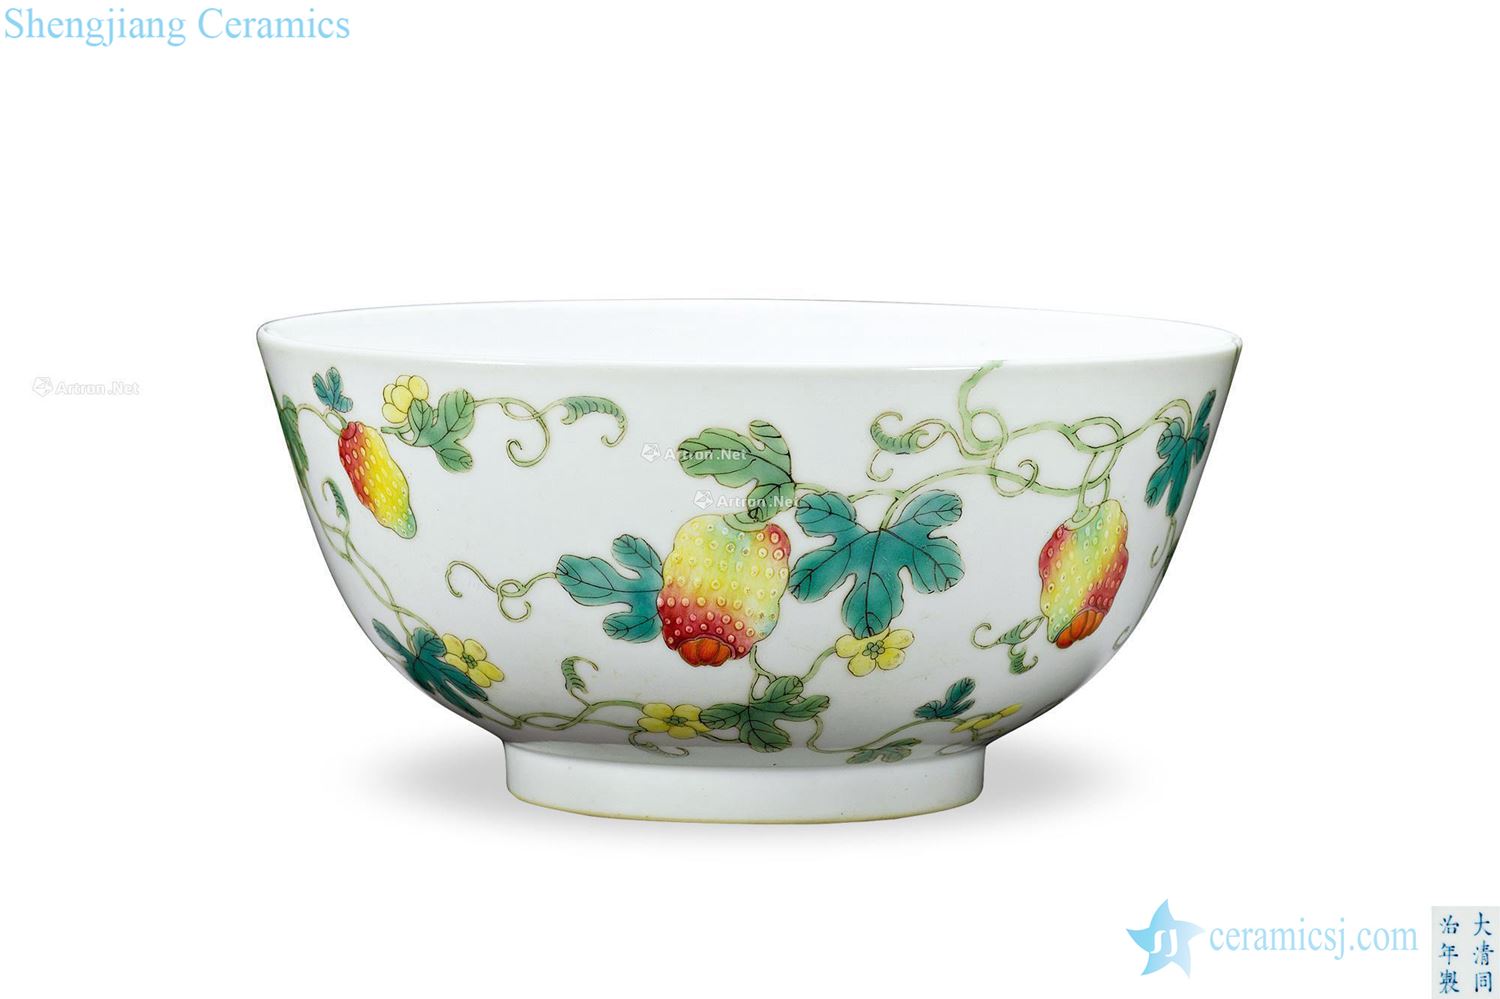 Dajing pastel lai stripes palace bowl